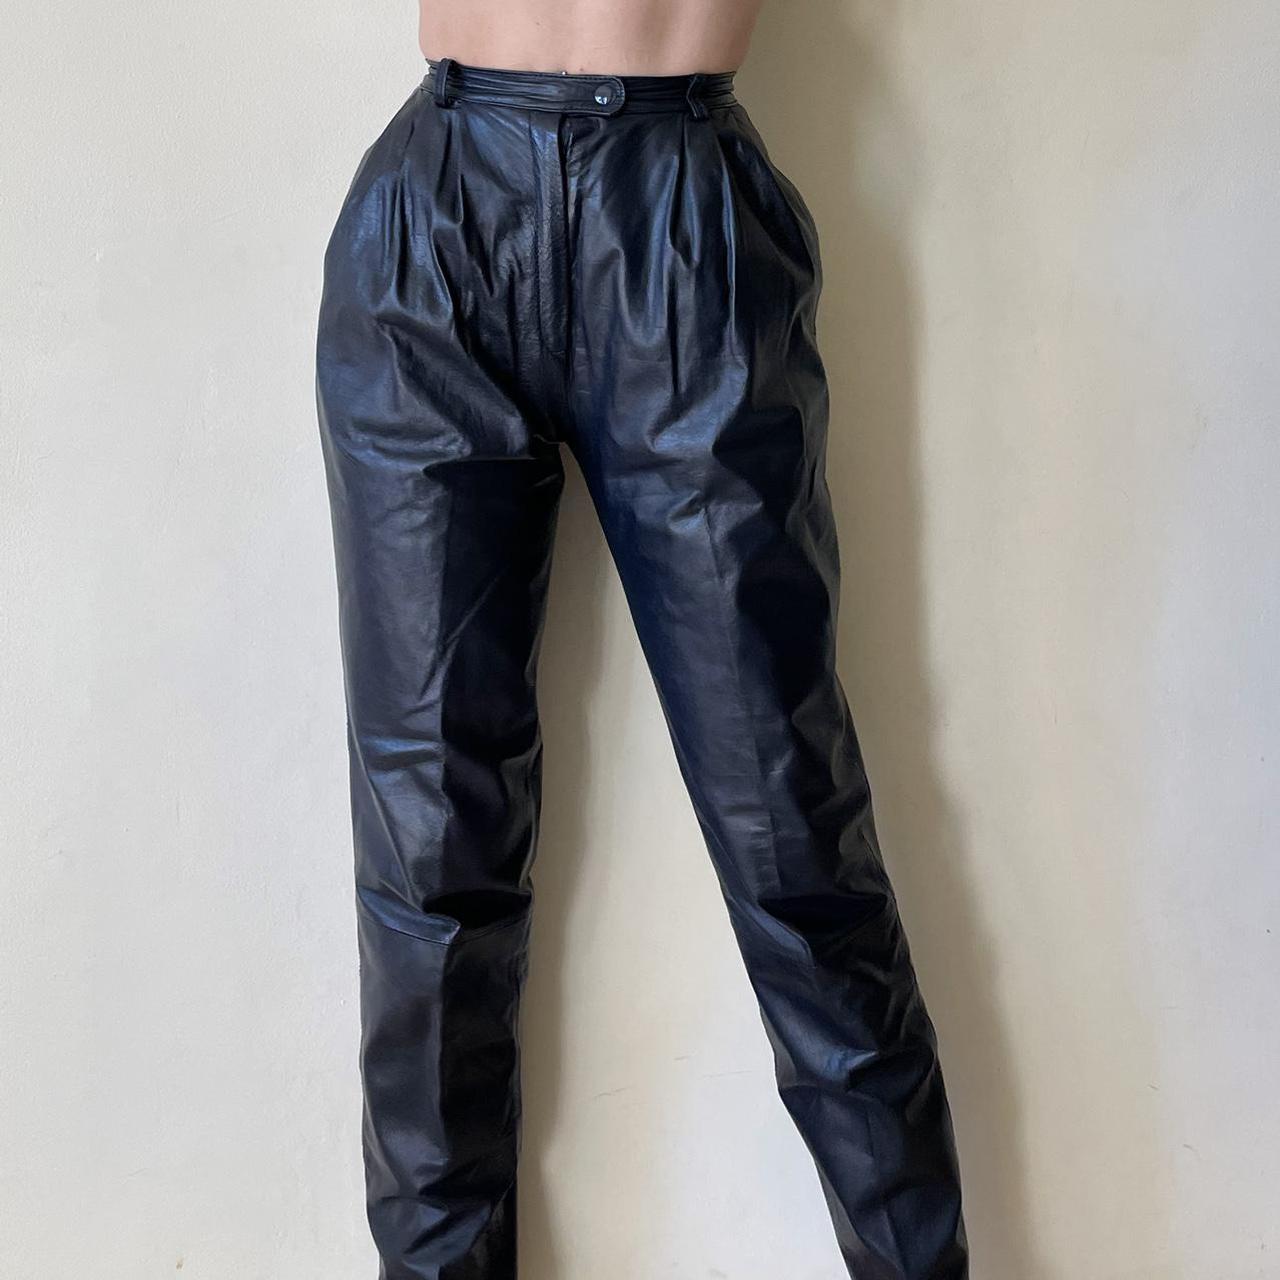 Insane navy blue vintage genuine leather pants... - Depop